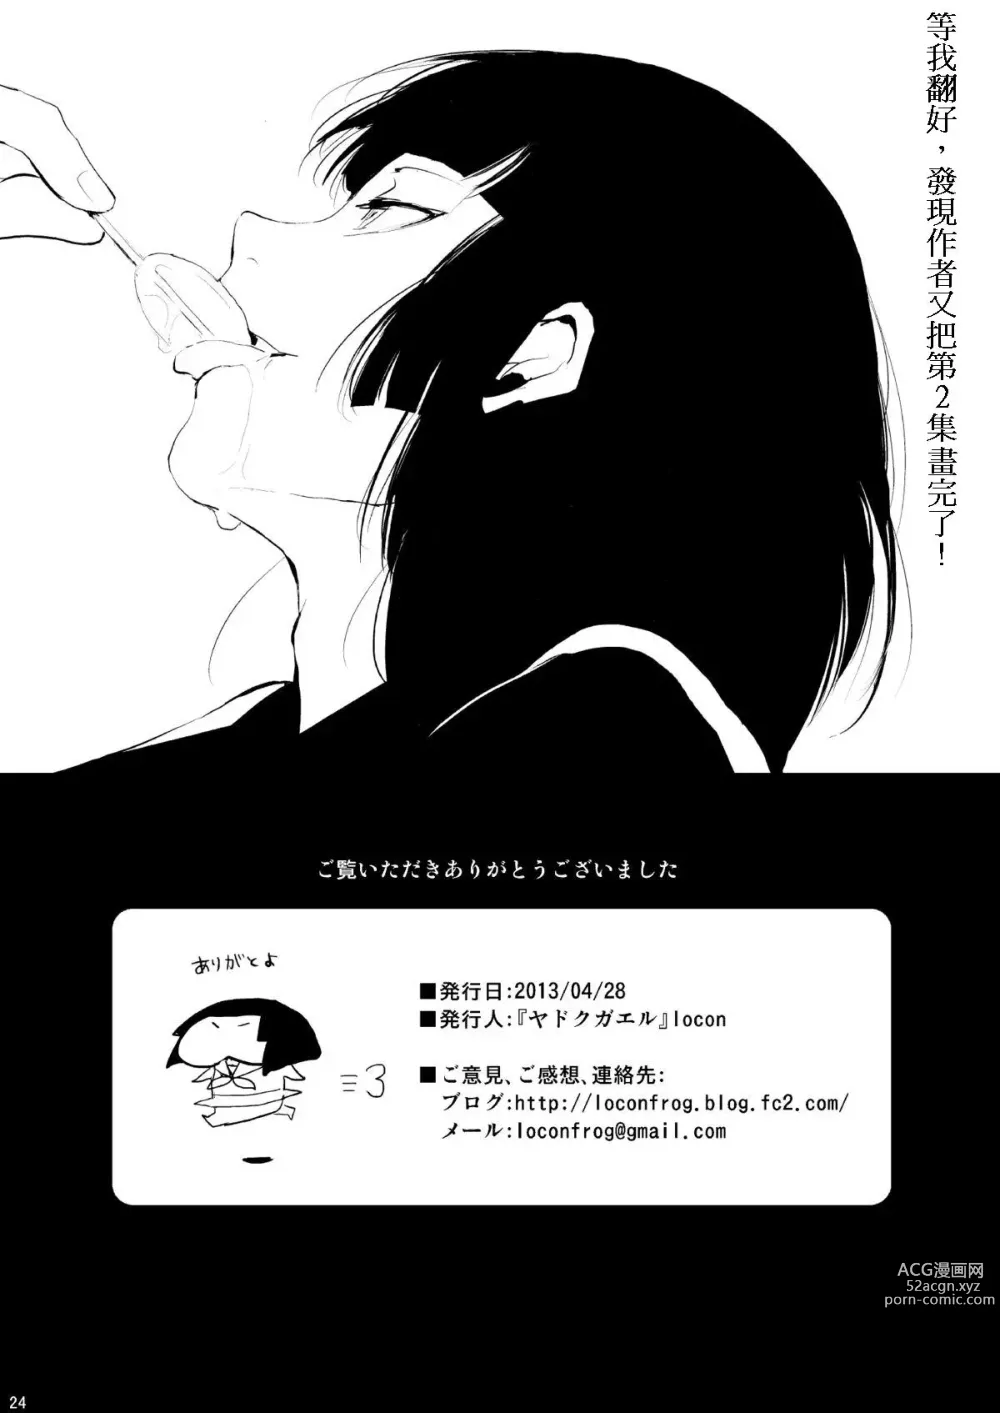 Page 25 of manga 要 -かなめ-